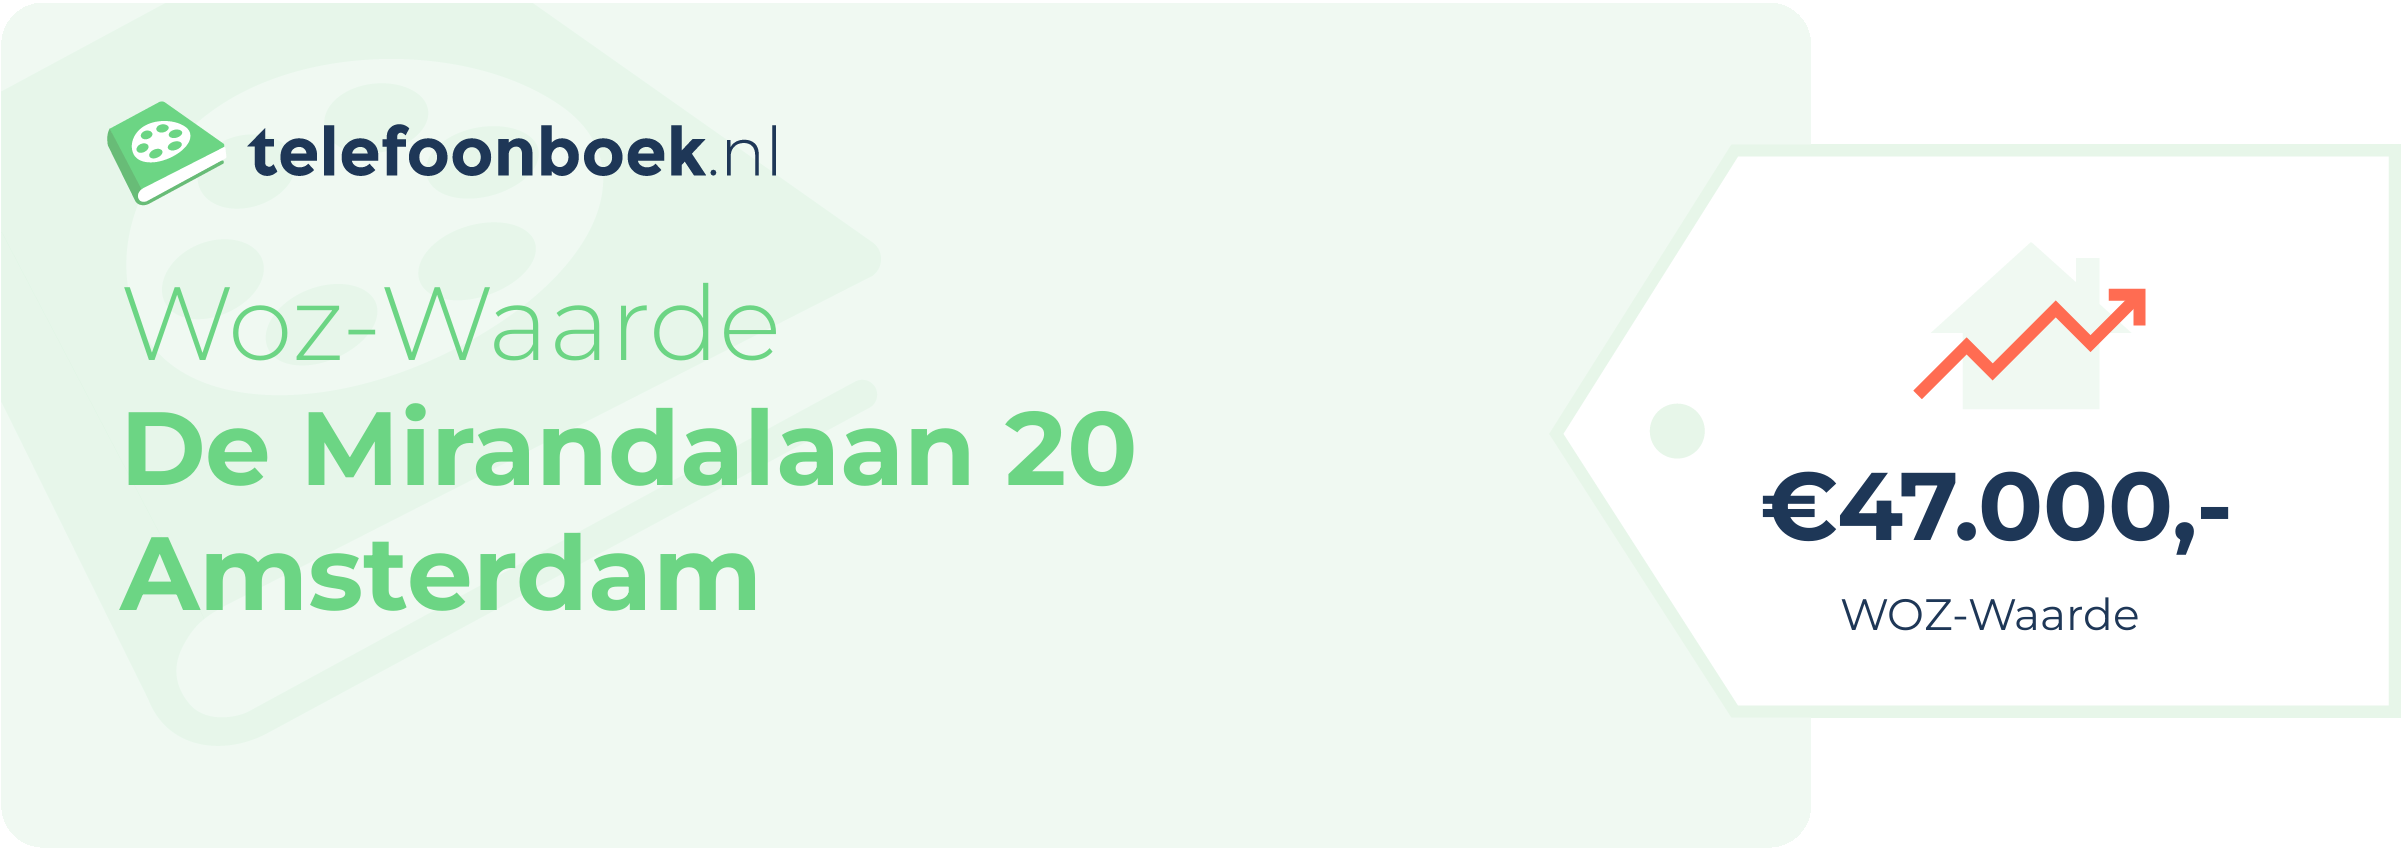 WOZ-waarde De Mirandalaan 20 Amsterdam